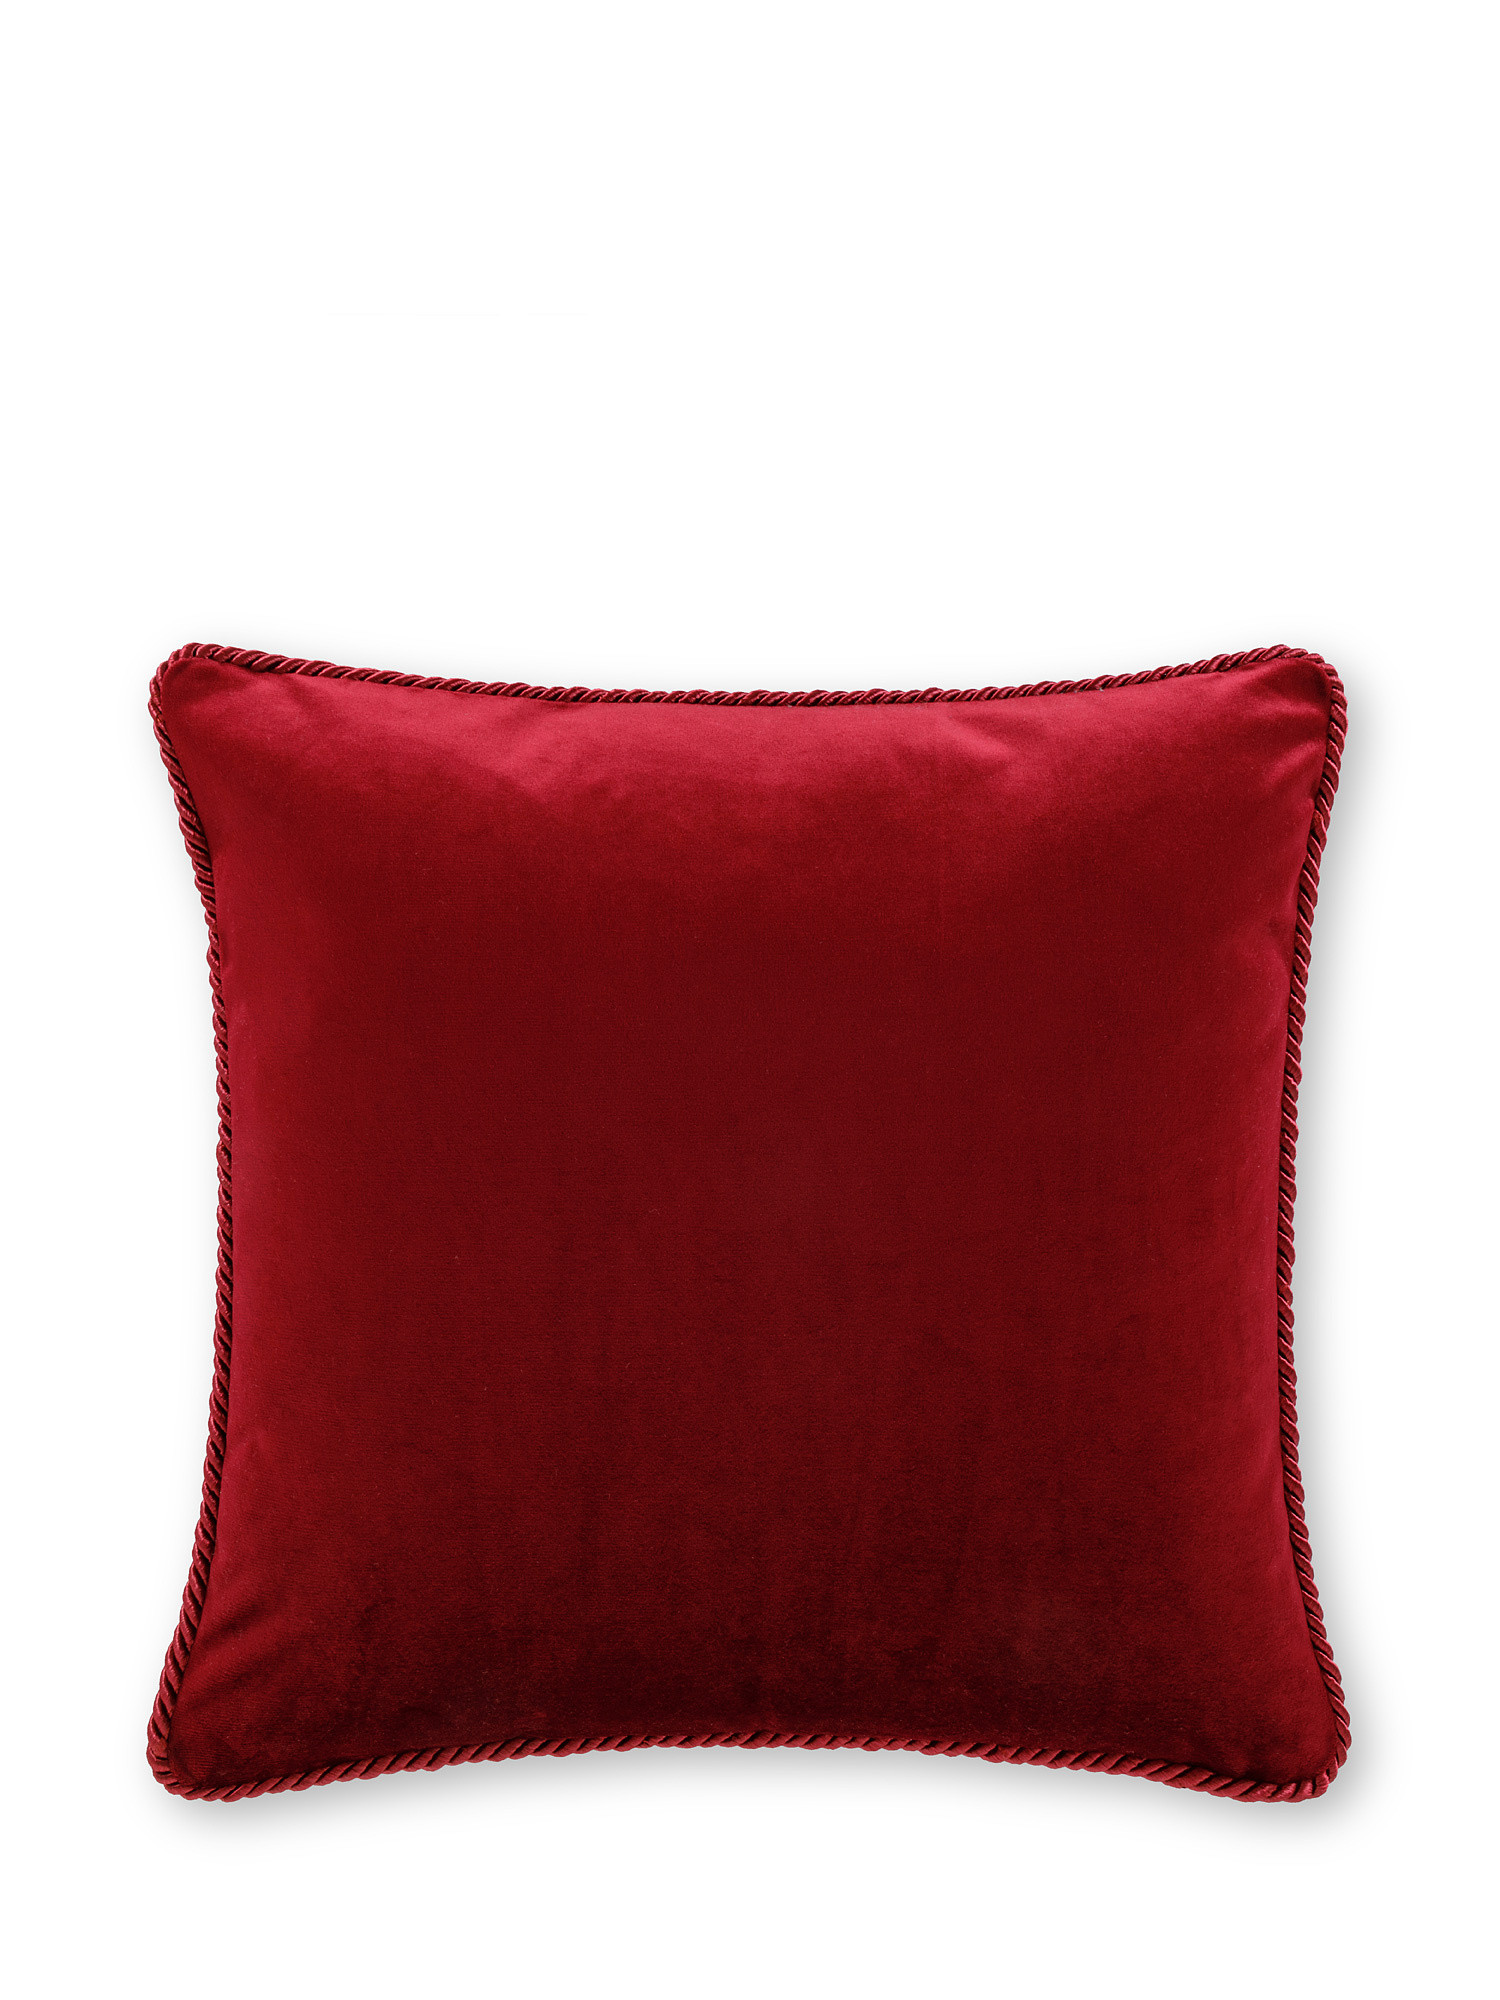 Cuscino velluto tinta unita 45x45cm, Rosso scuro, large